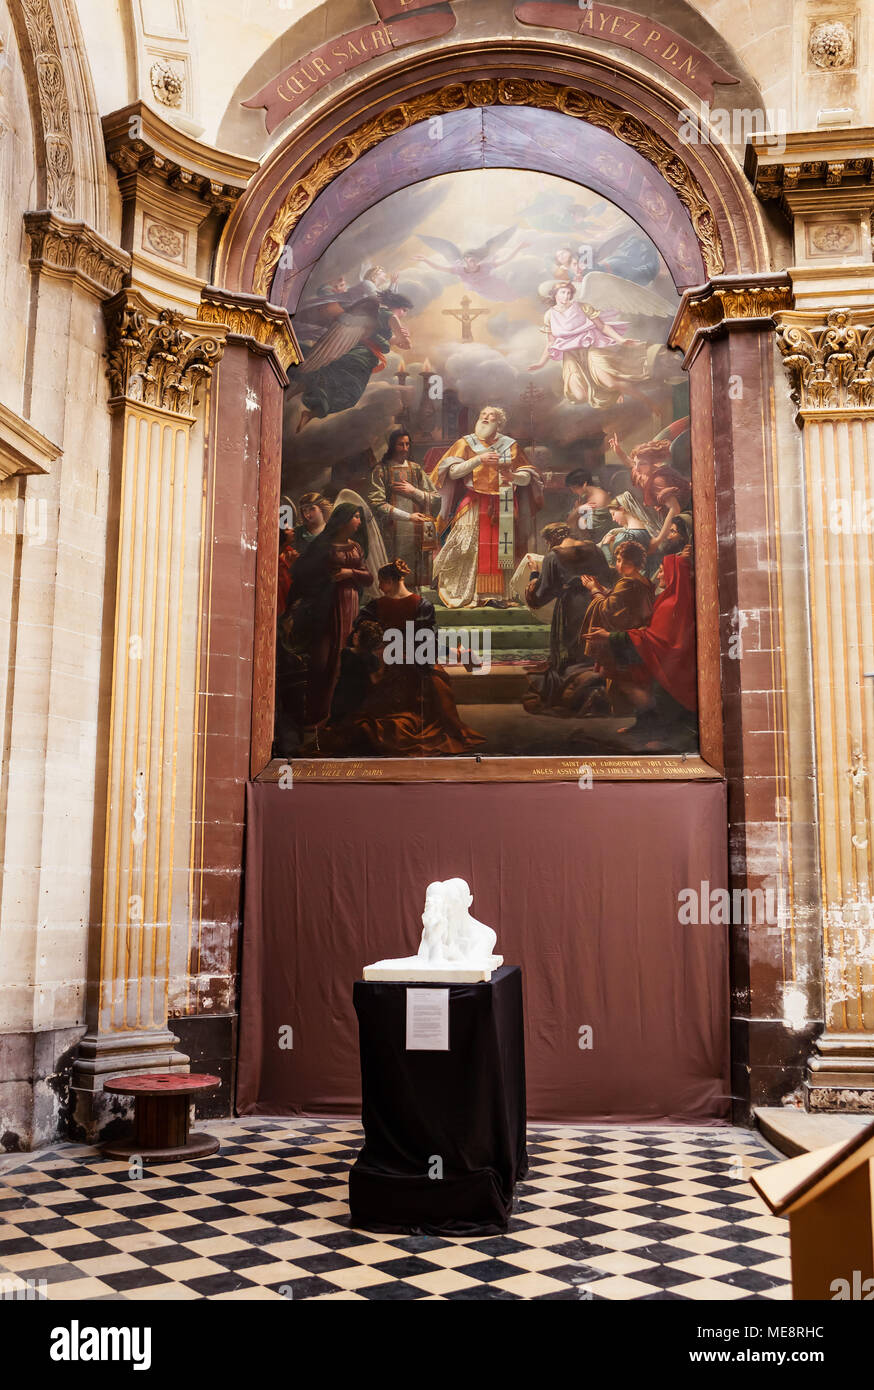 Interiors decor of saint-roch church, Paris, France Stock Photo - Alamy